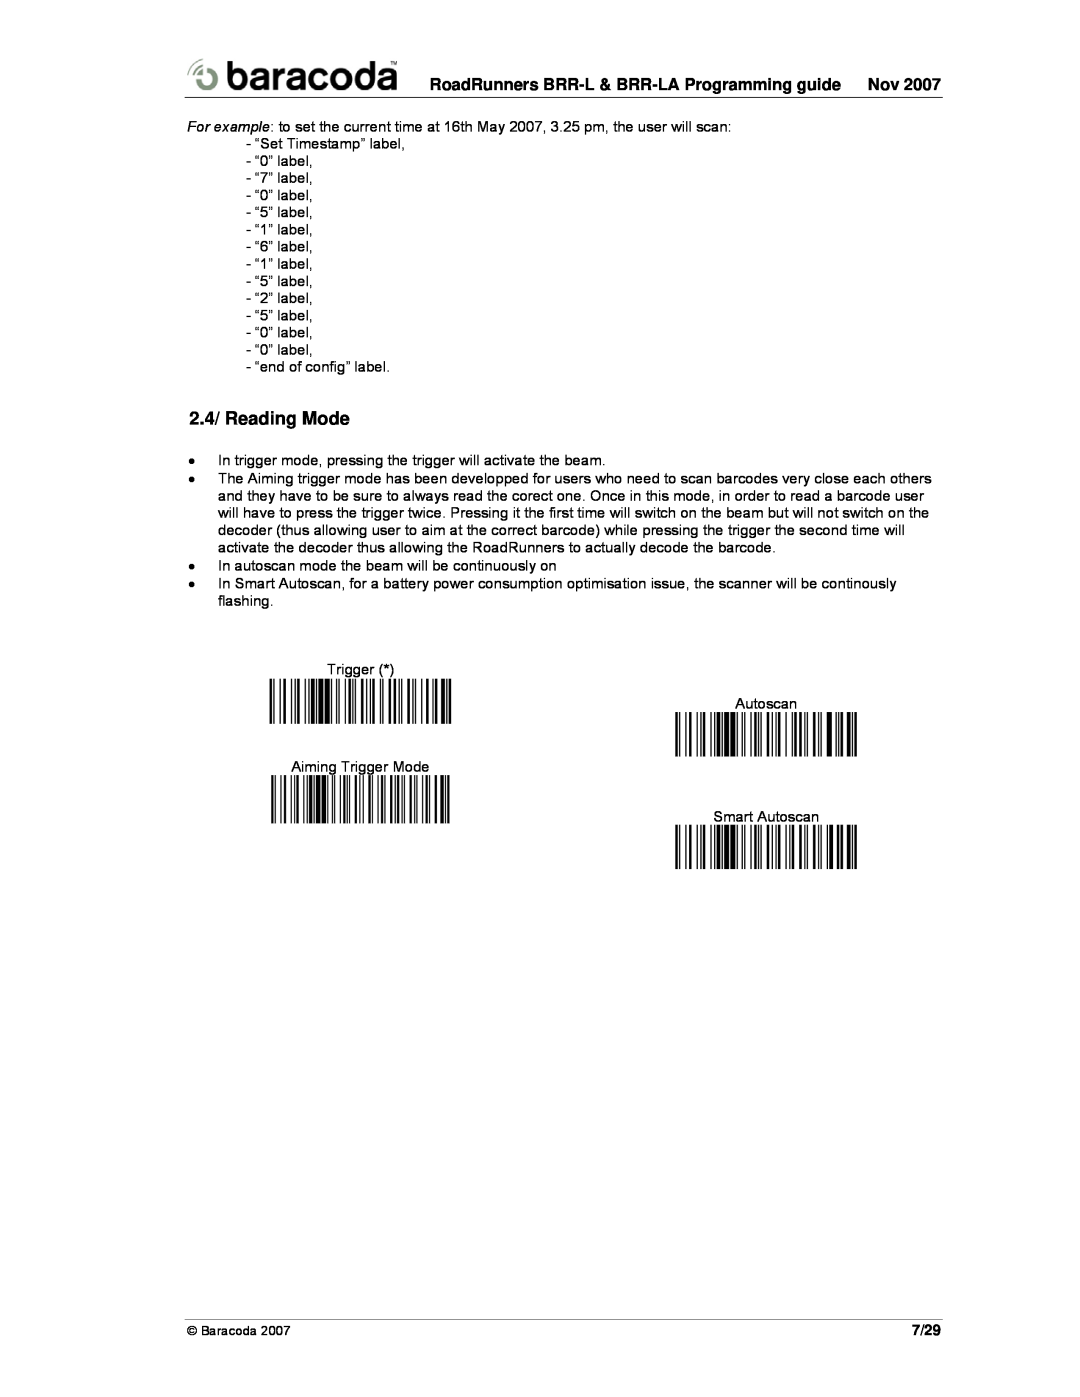 Baracoda BBR-LA specifications 2.4/ Reading Mode, RoadRunners BRR-L & BRR-LA Programming guide Nov, 7/29 